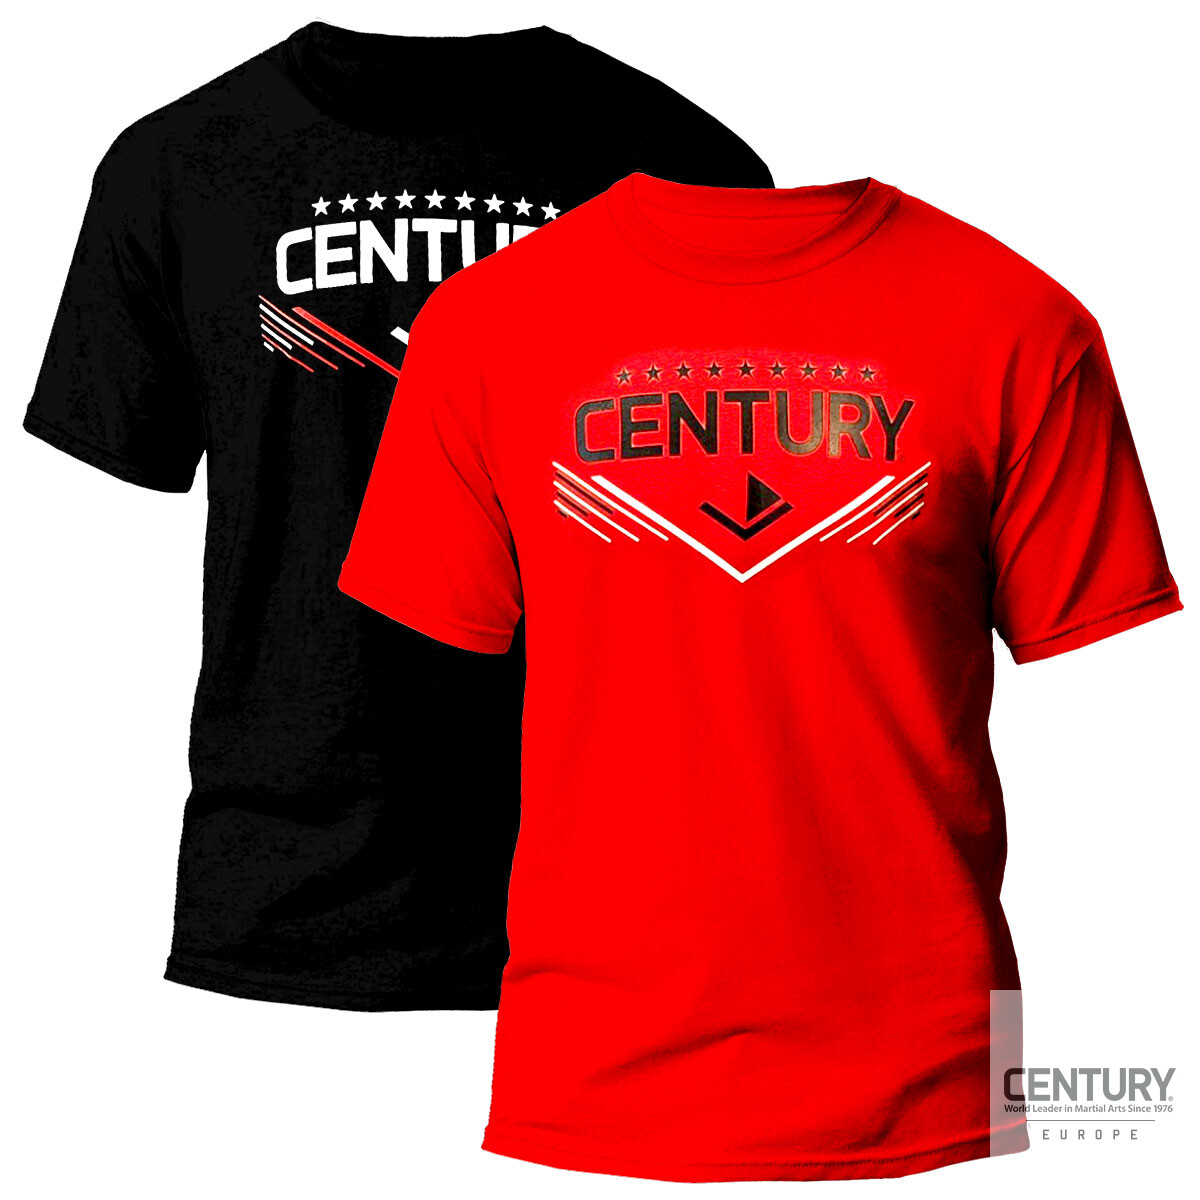 Century Family 2024 Unisex T-Shirt